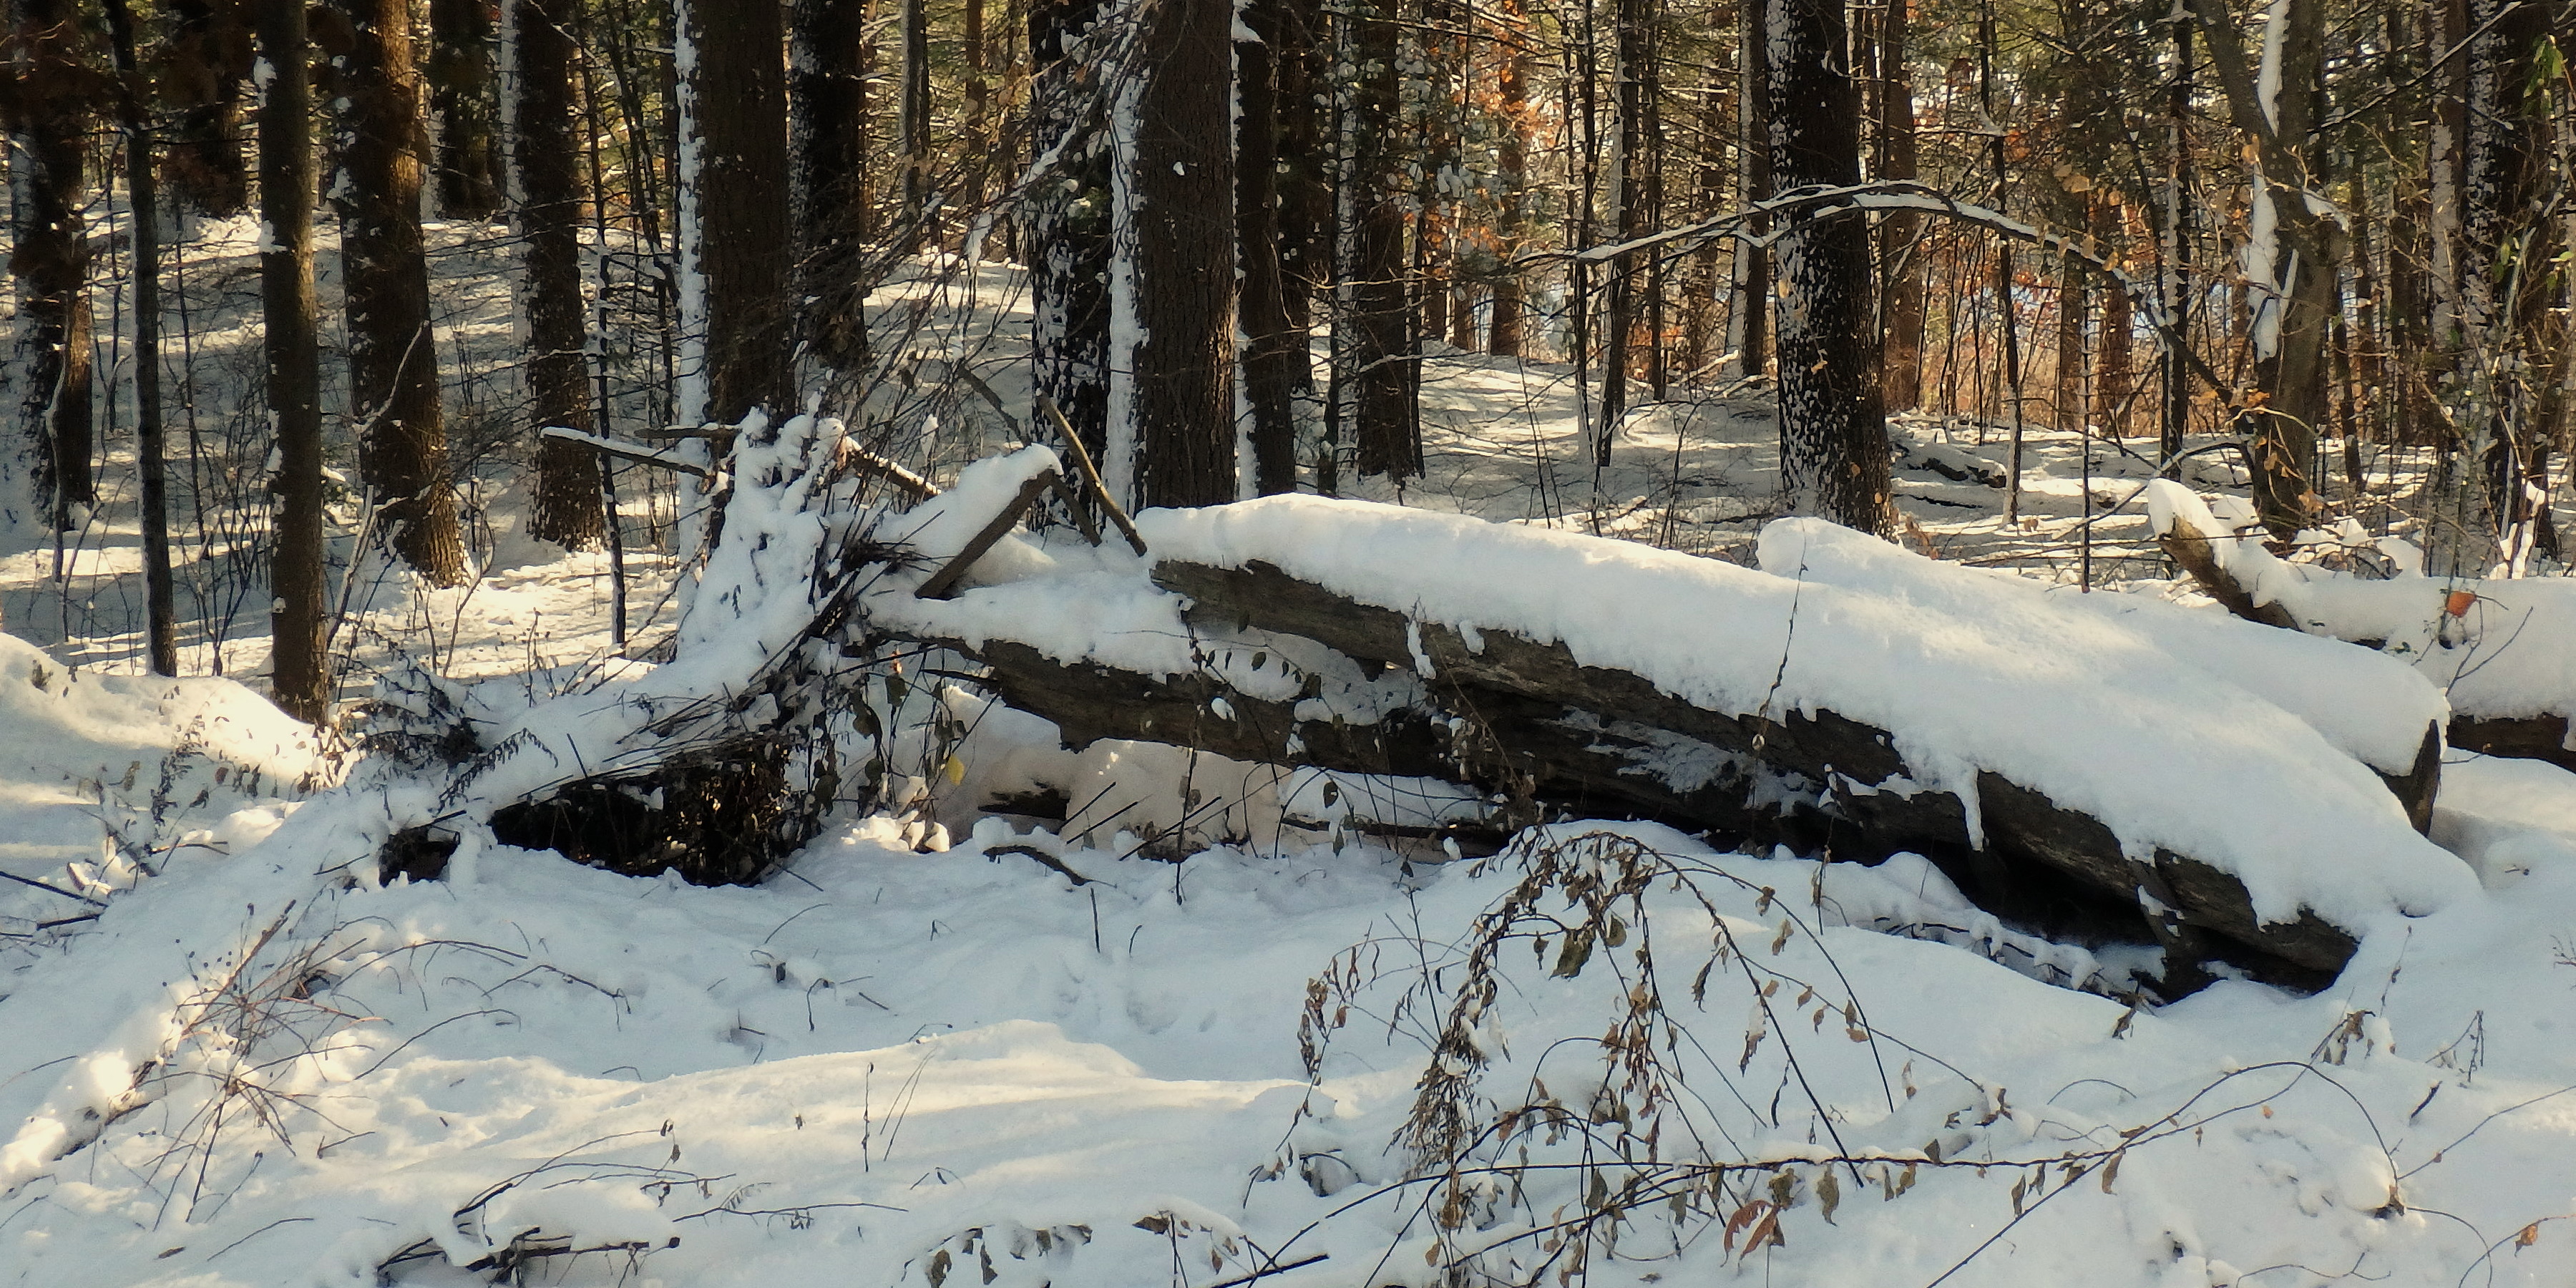 Snow covered log